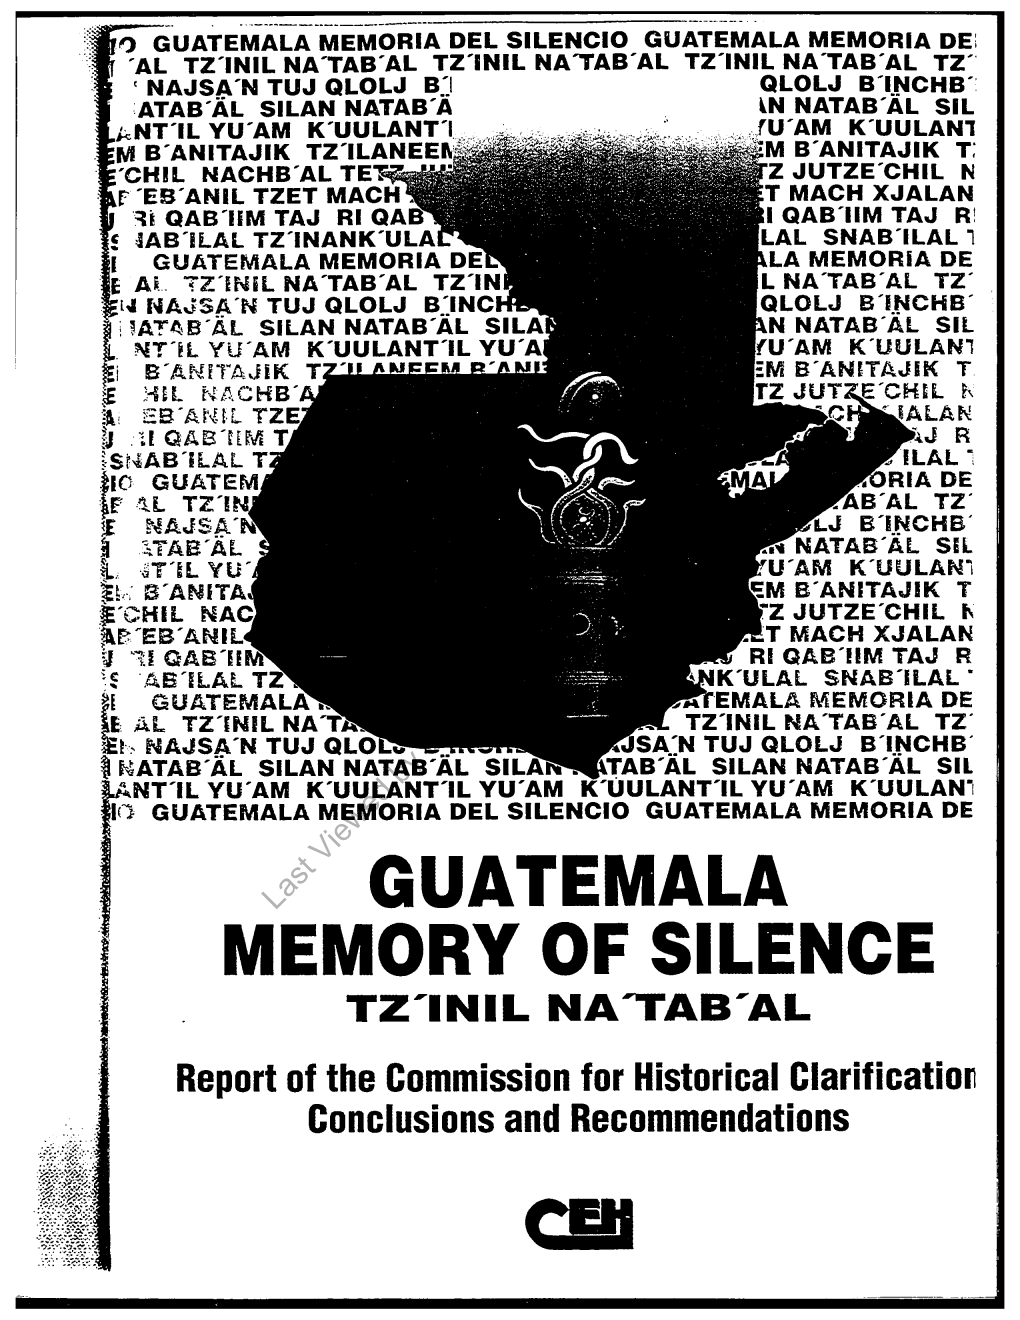 Commission for Historical Clarification, Guatemala